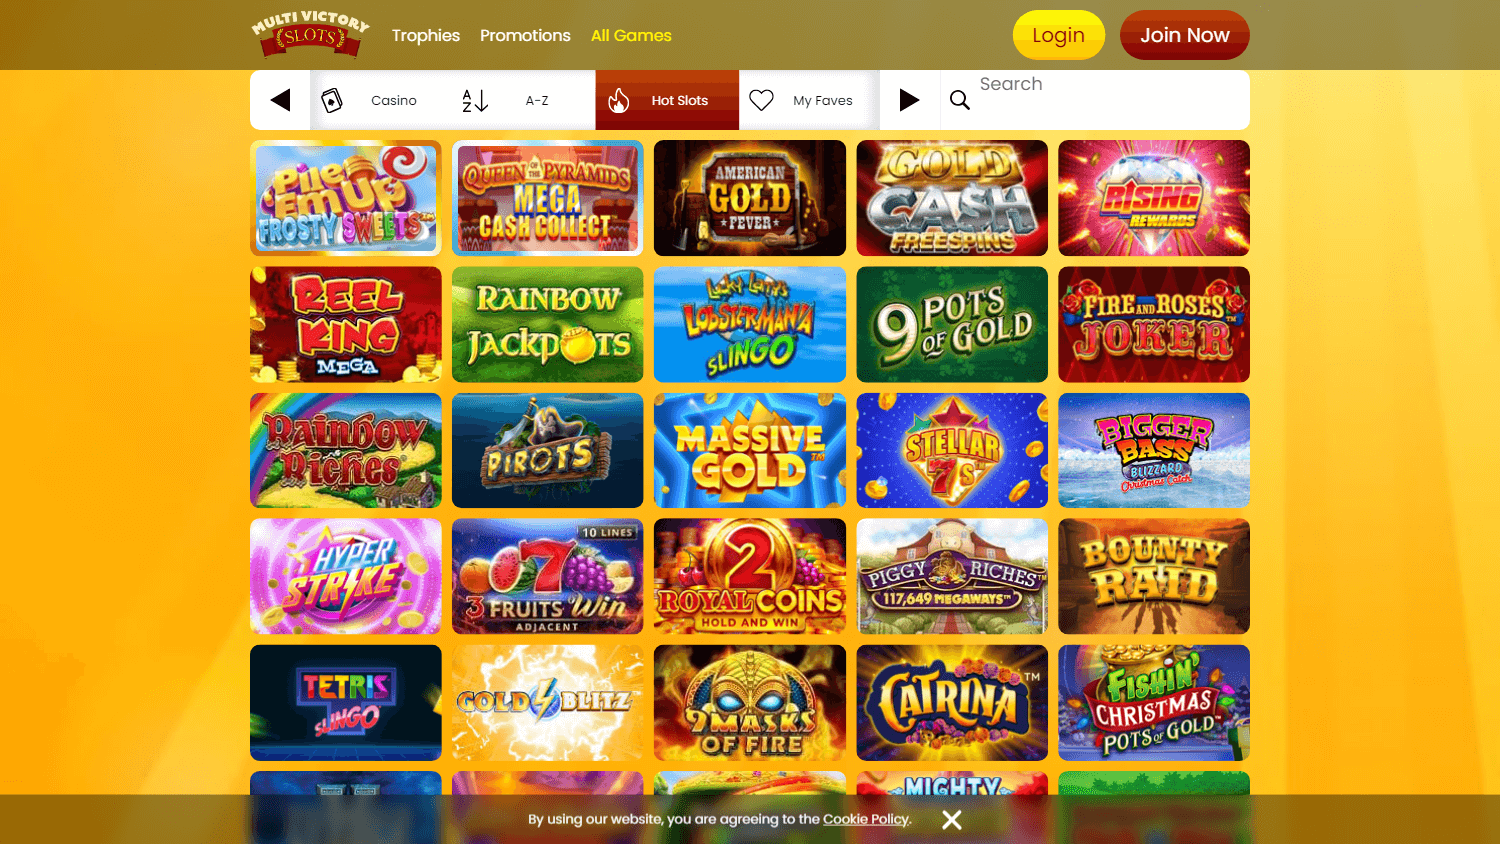 multi_victory_slots_casino_game_gallery_desktop